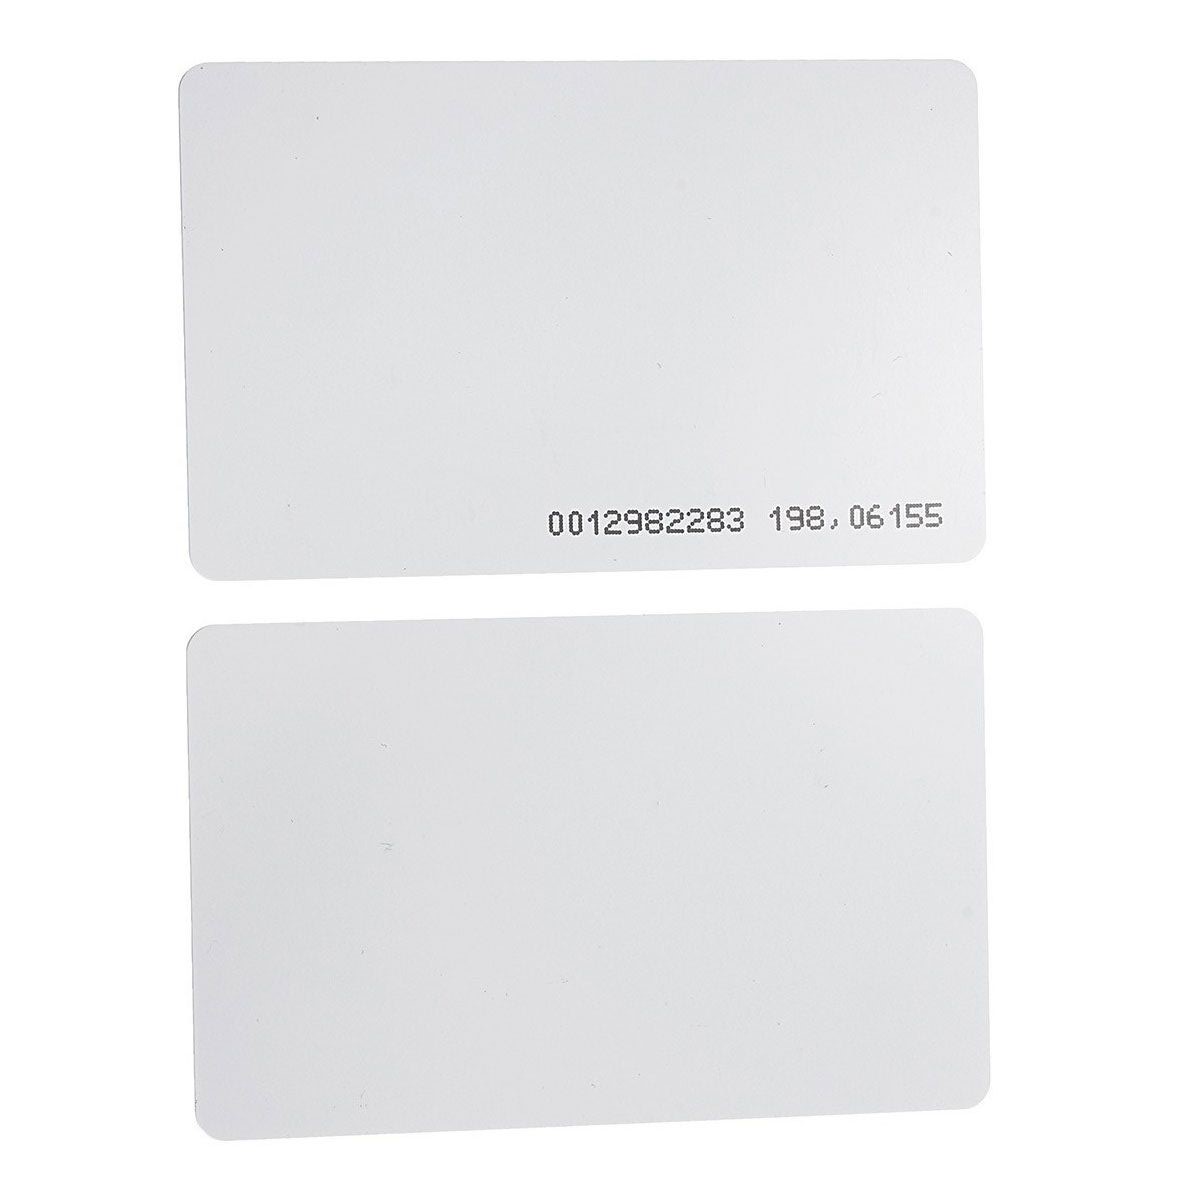 Cartão RFID 125 KHz PVC - 500 unidades